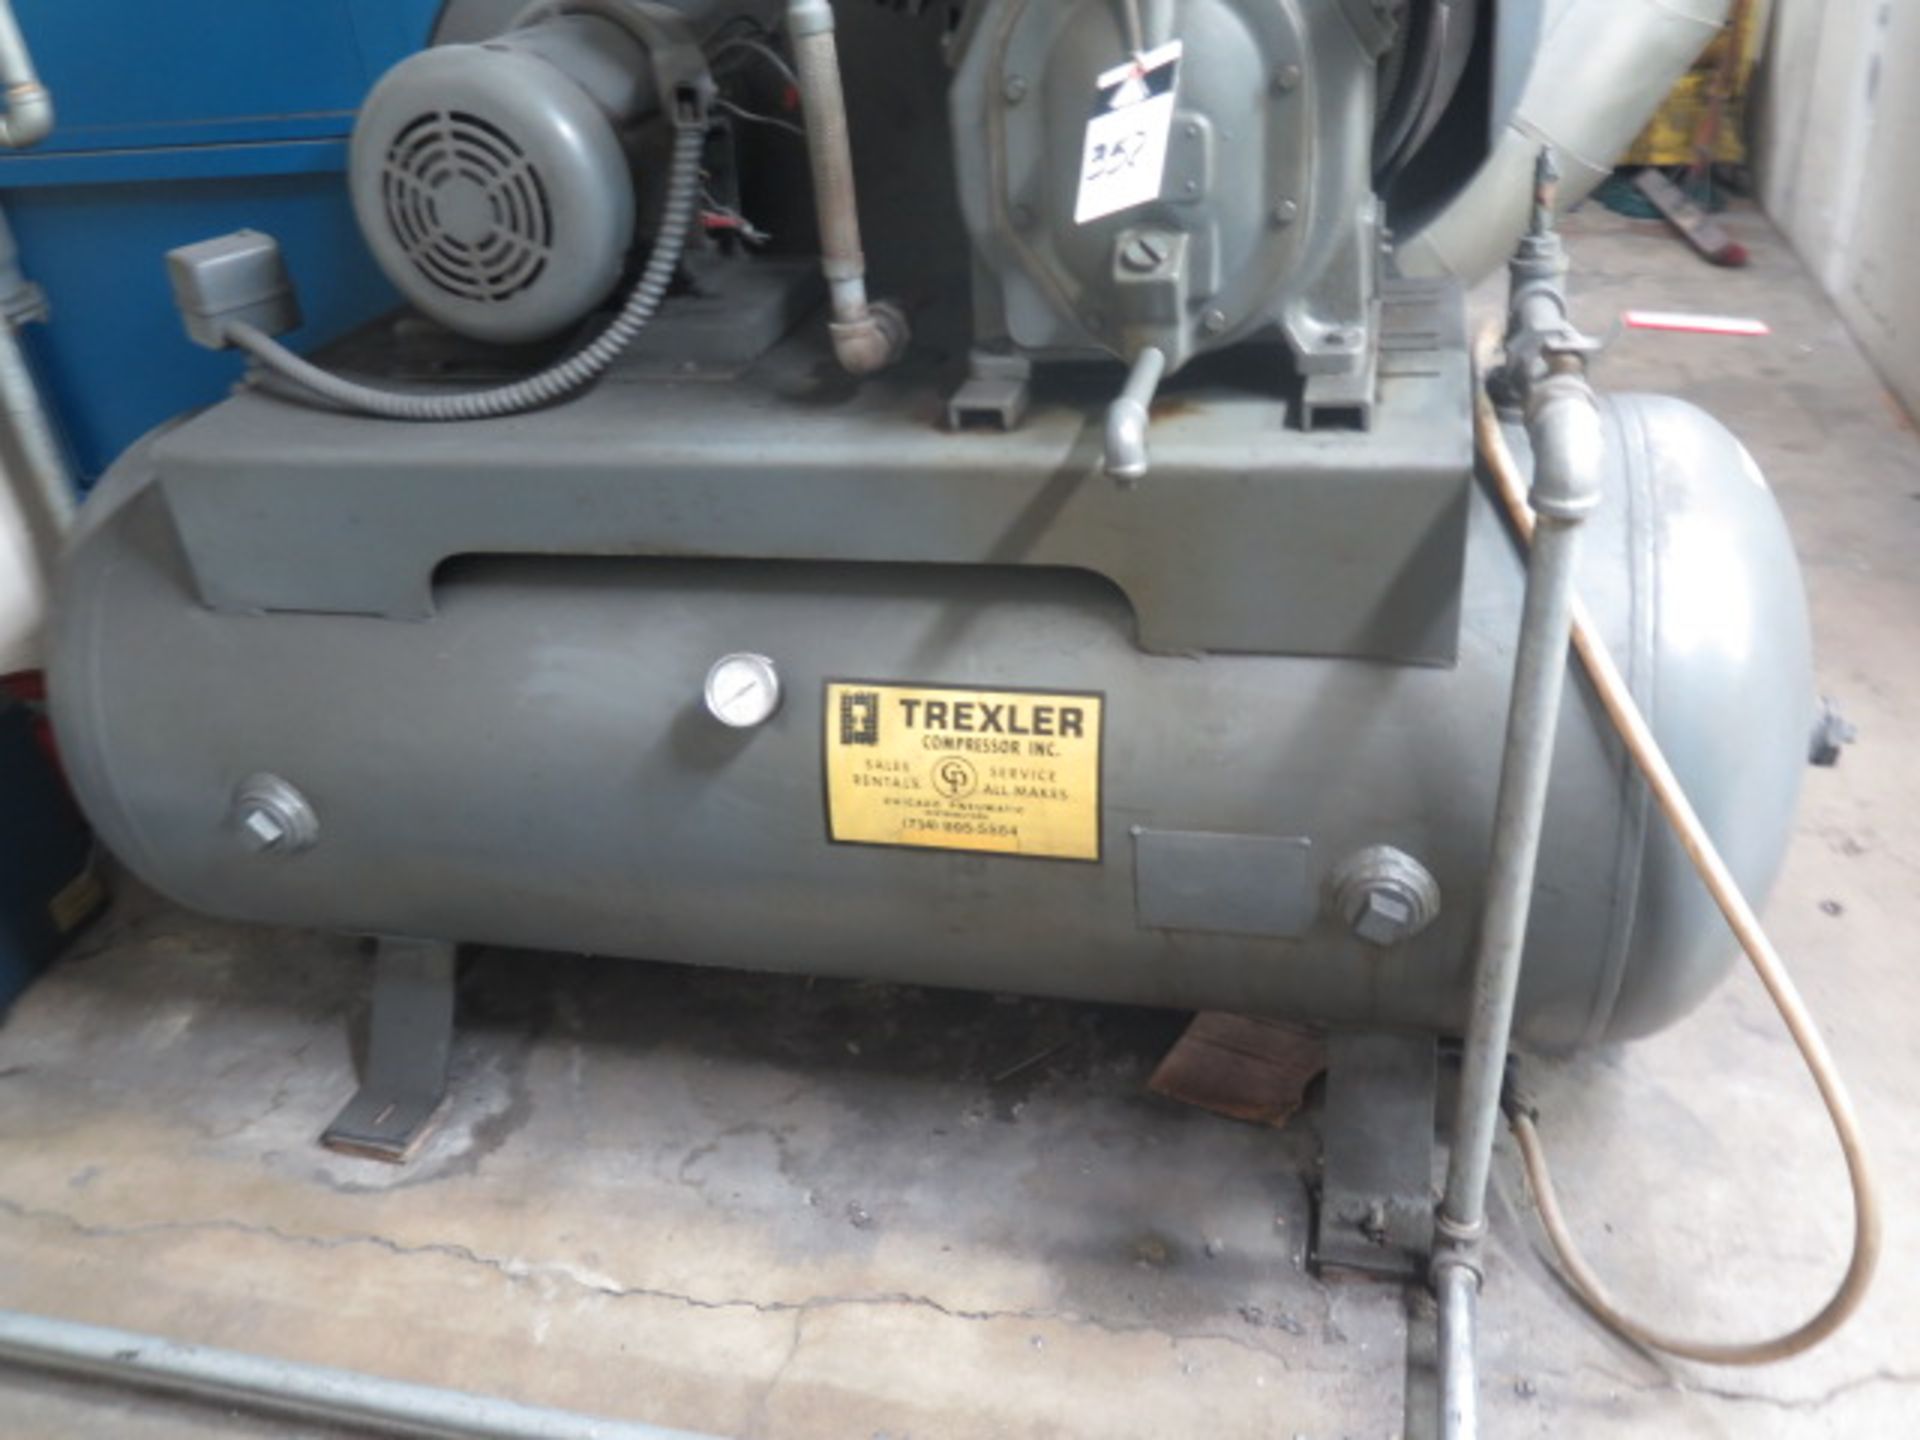 Trexler 5Hp Horizontal Air Compressor w/ 3-Stage Pump, 120 Gallon Tank, Arrow Refrigerated Air - Image 4 of 4